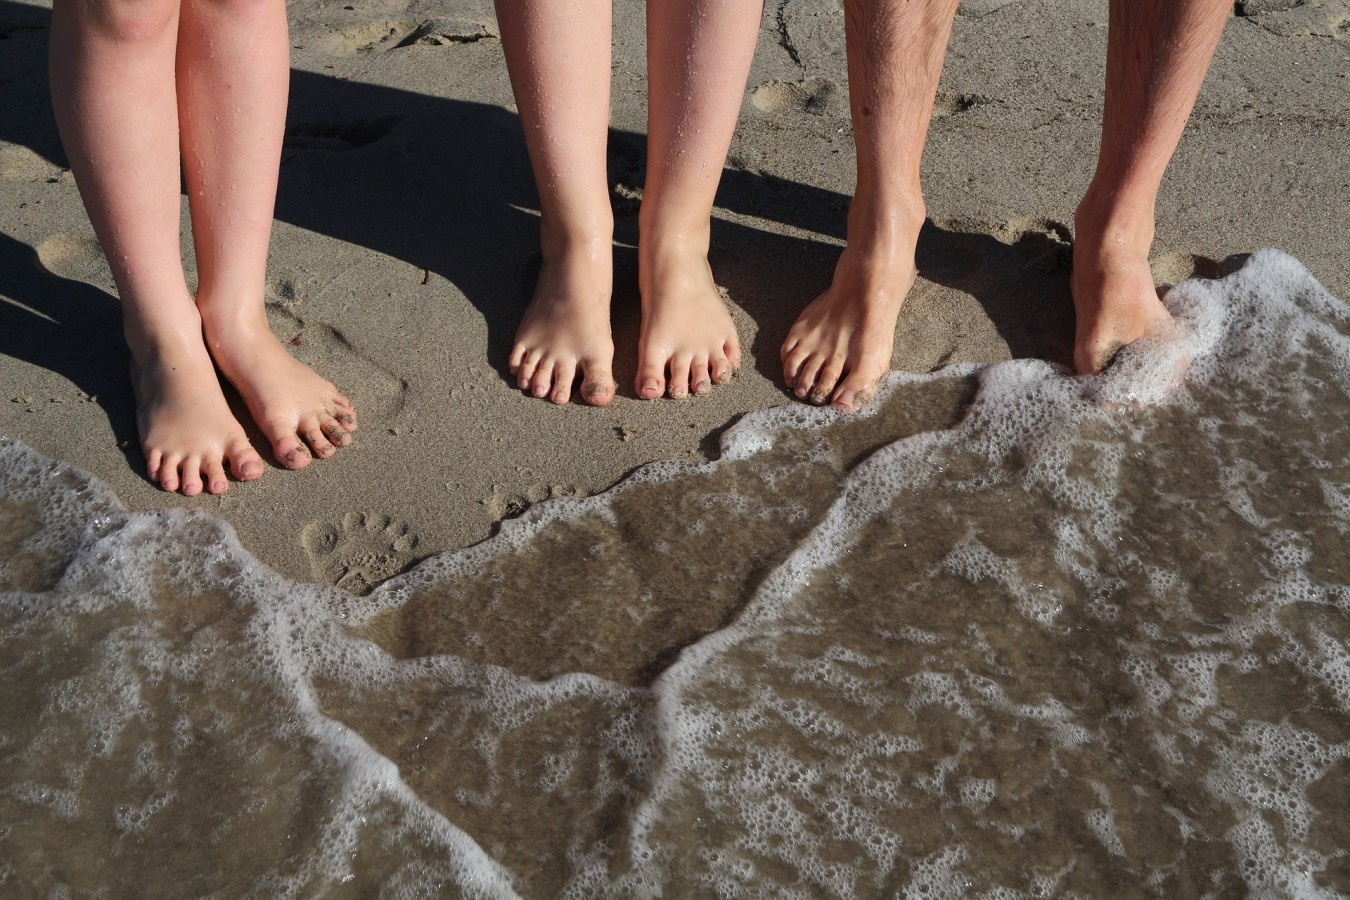 https://pixabay.com/en/beach-sand-sea-feet-family-910969/